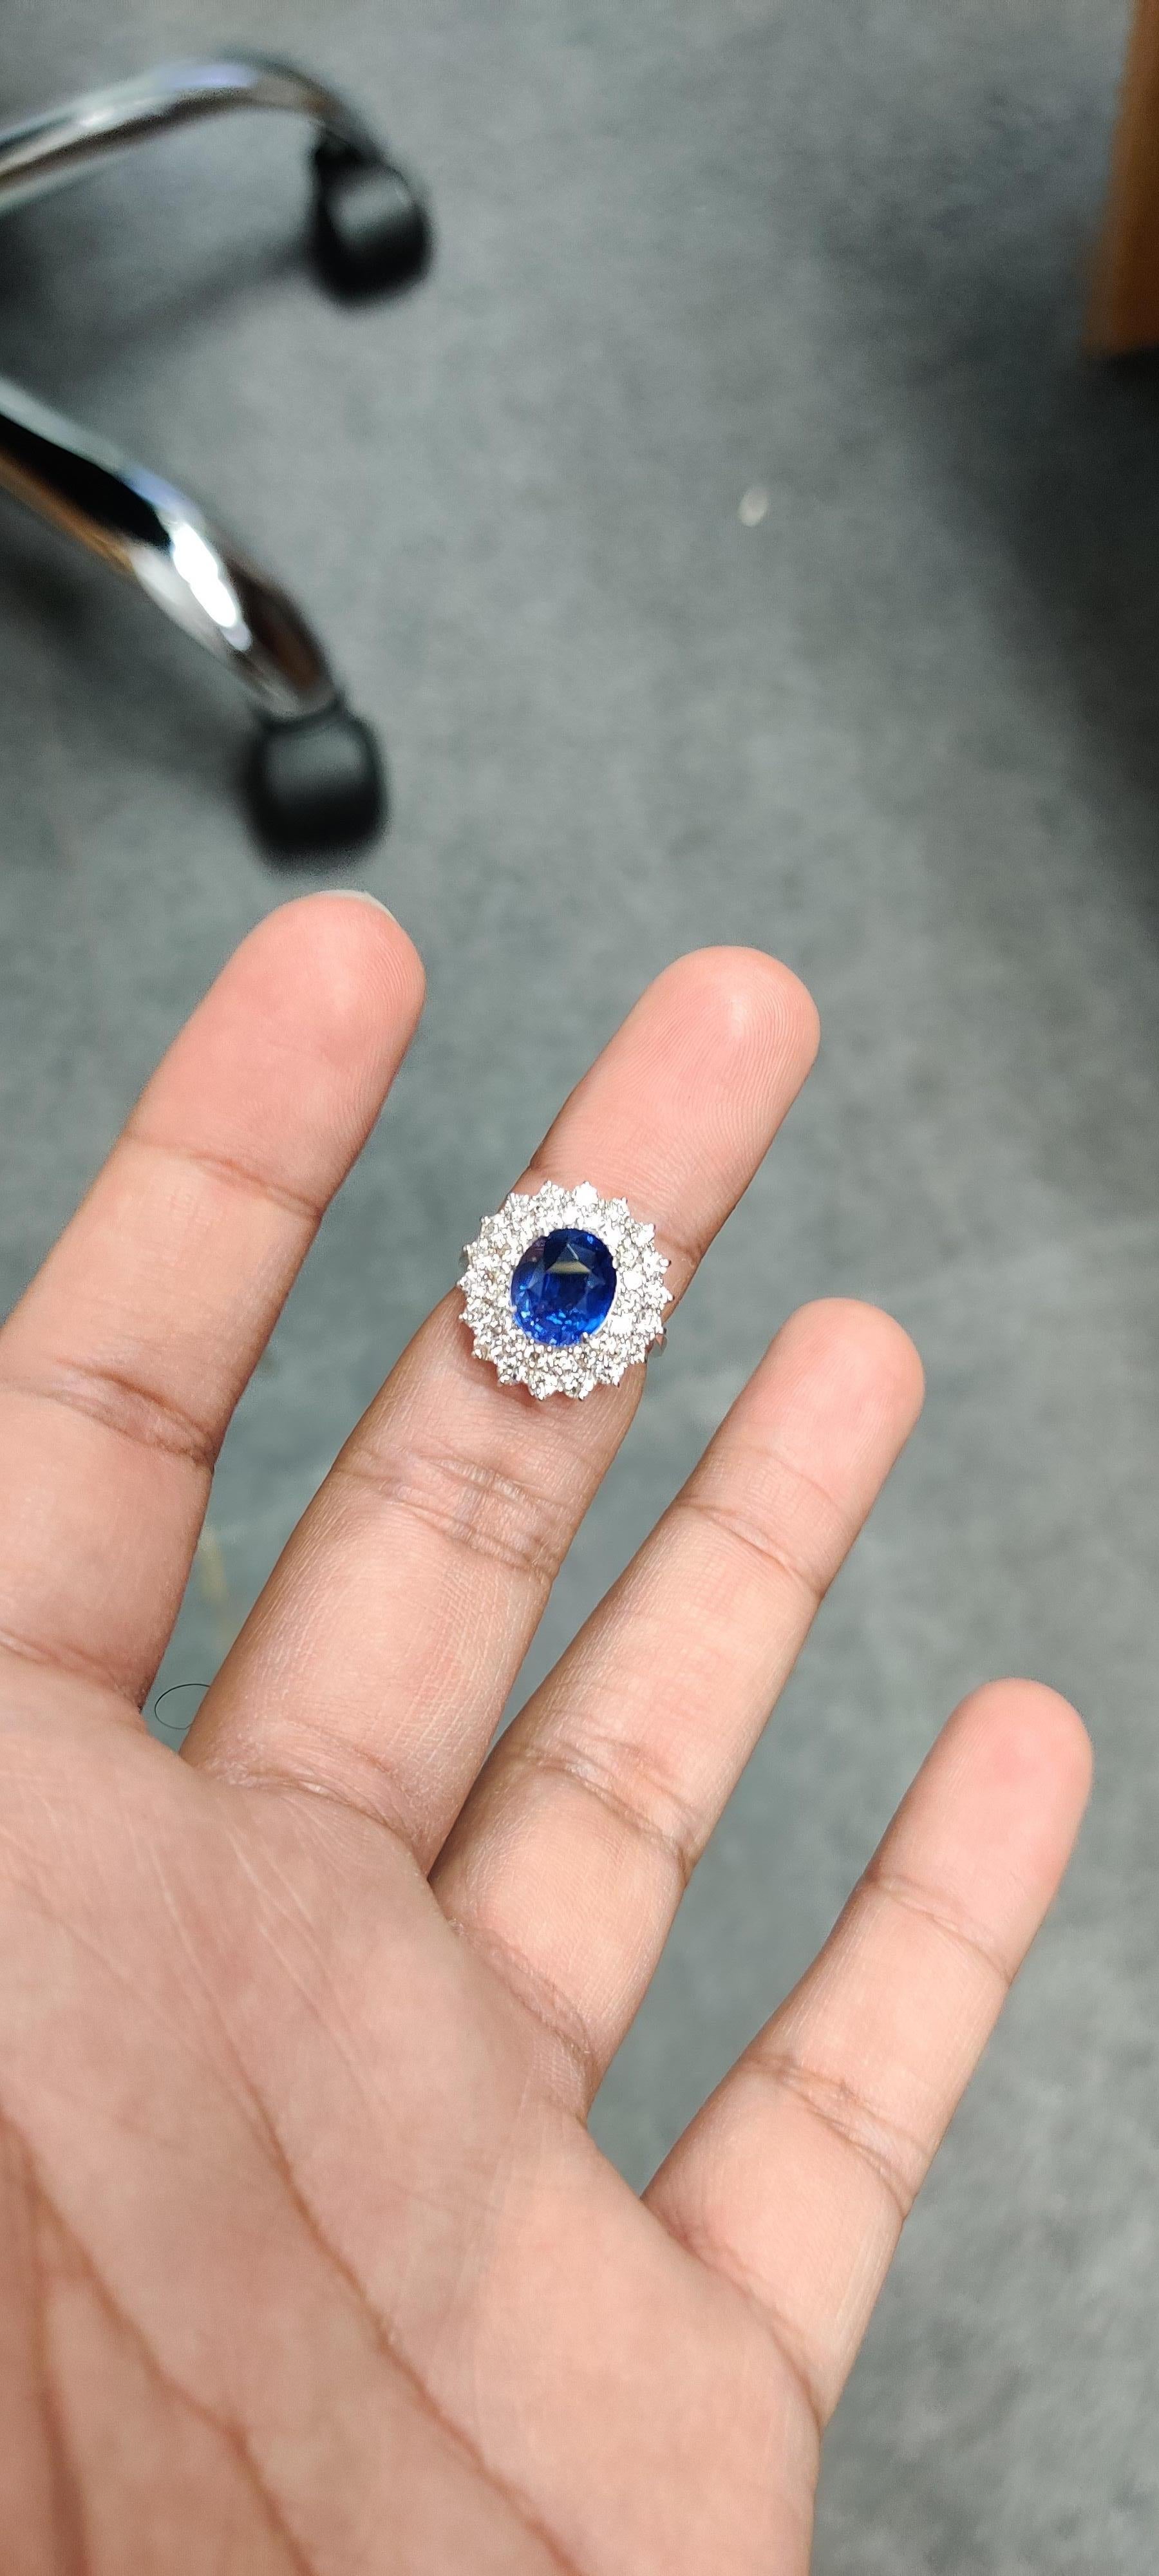 3.74 Carat Sri Lanka Blue Sapphire Diamond Ring in 18K Gold 1